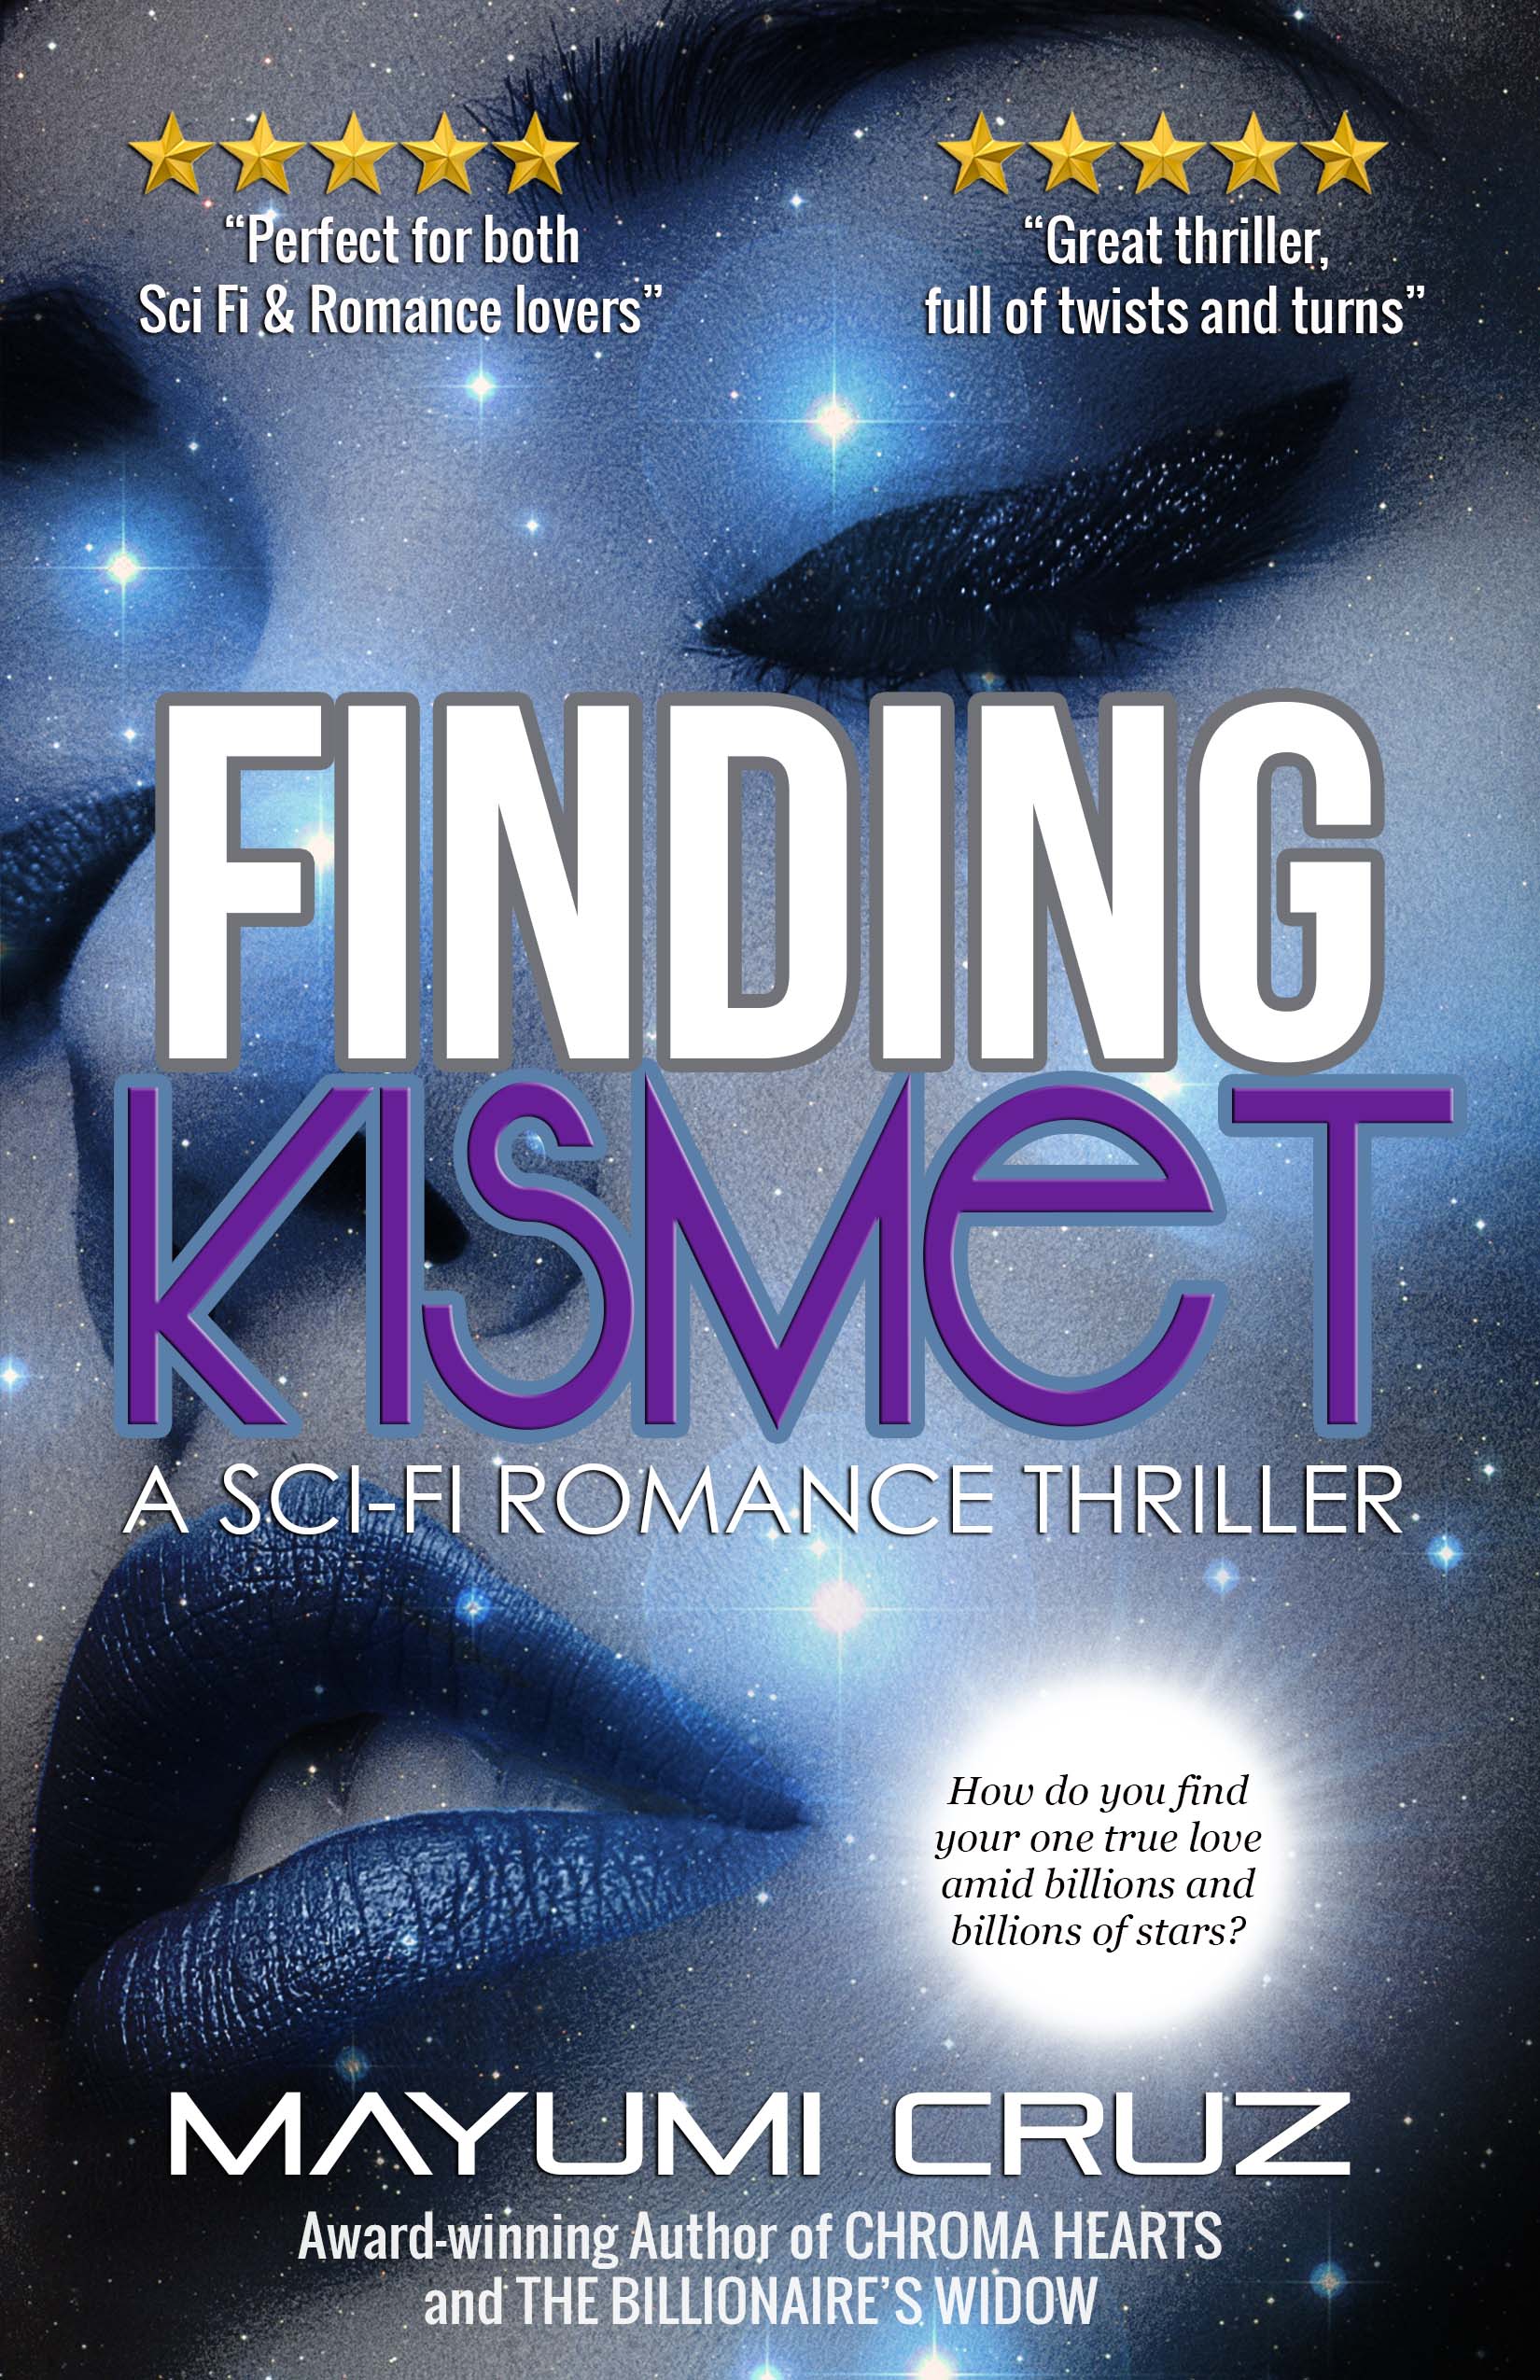 Books by Mayumi Cruz - Finding Kismet